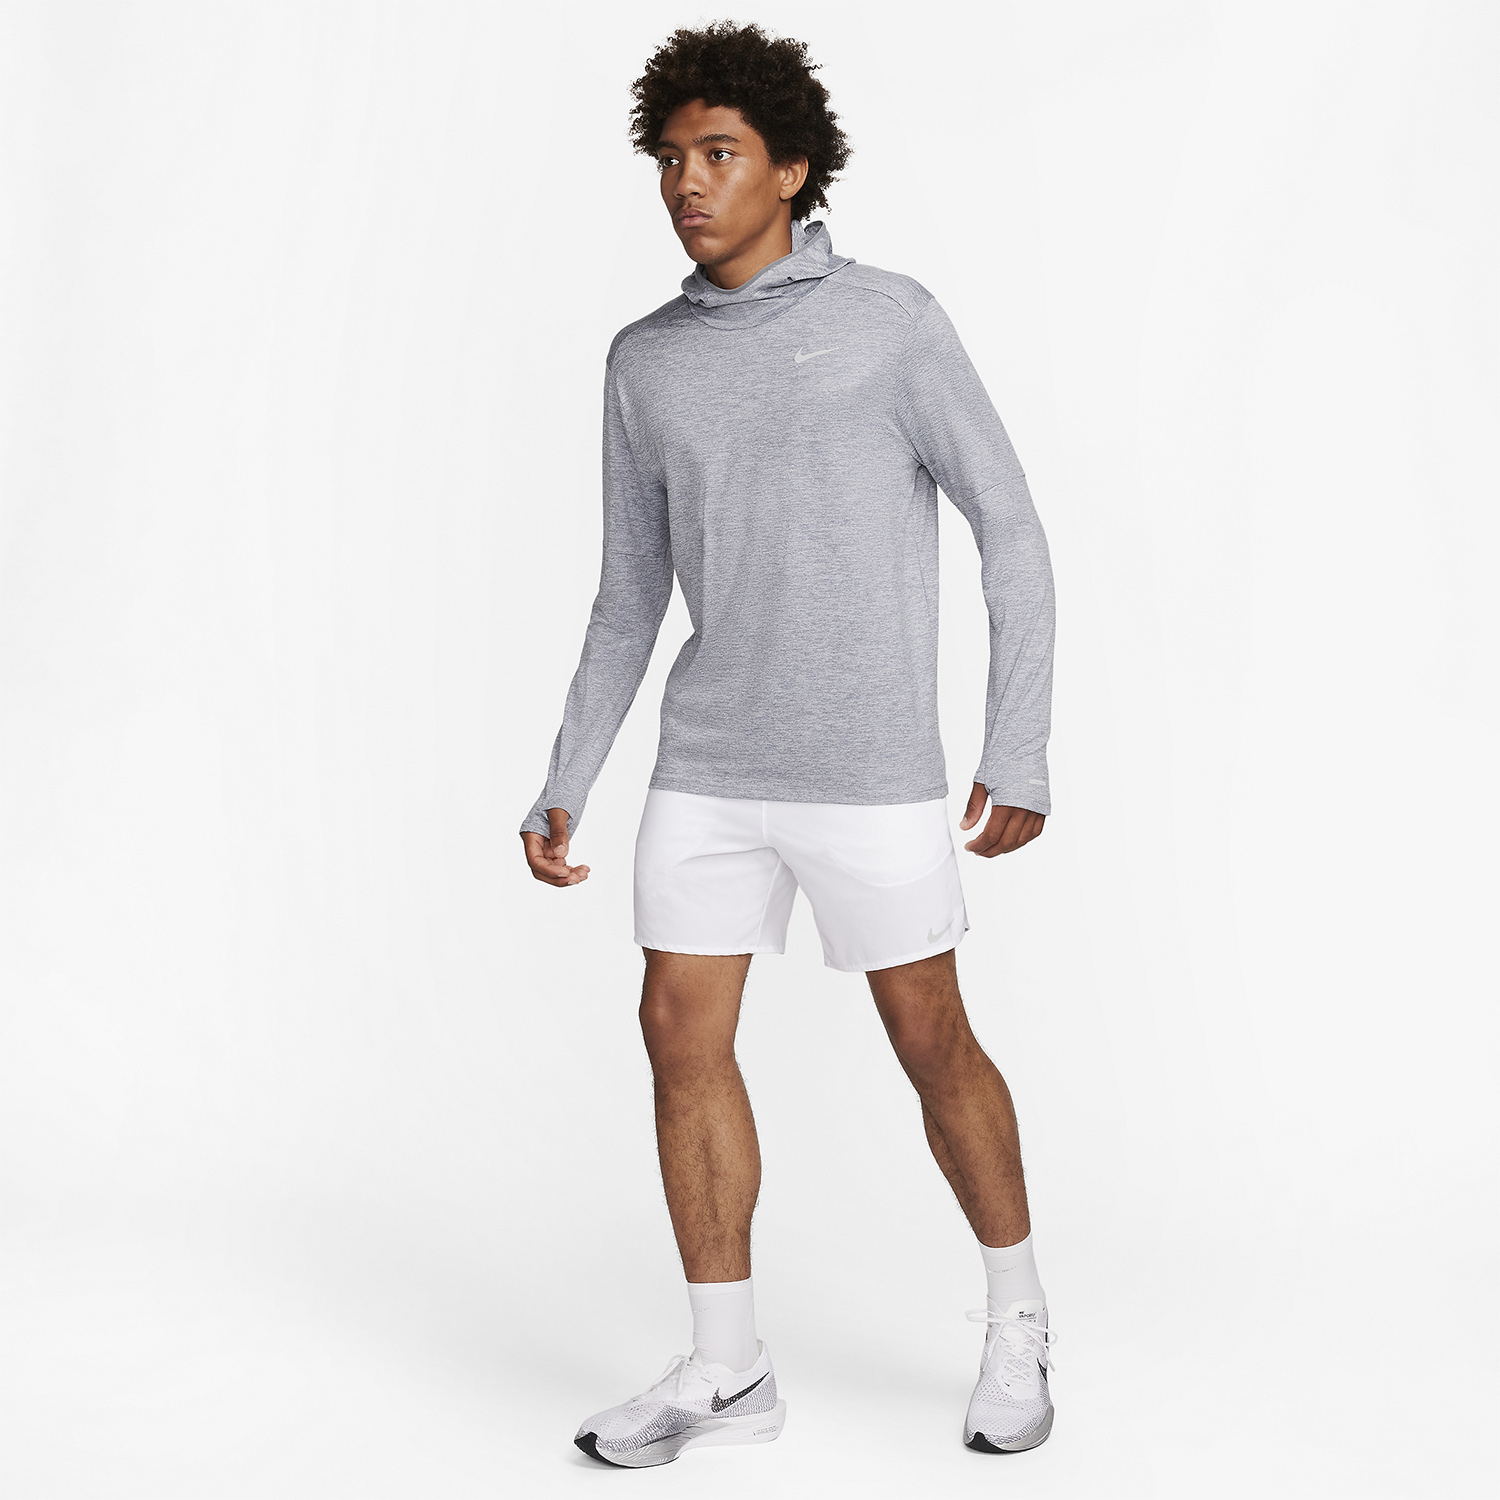 Nike Dri-FIT Element Shirt - Smoke Grey/Grey Fog/Heather/Reflective Silver